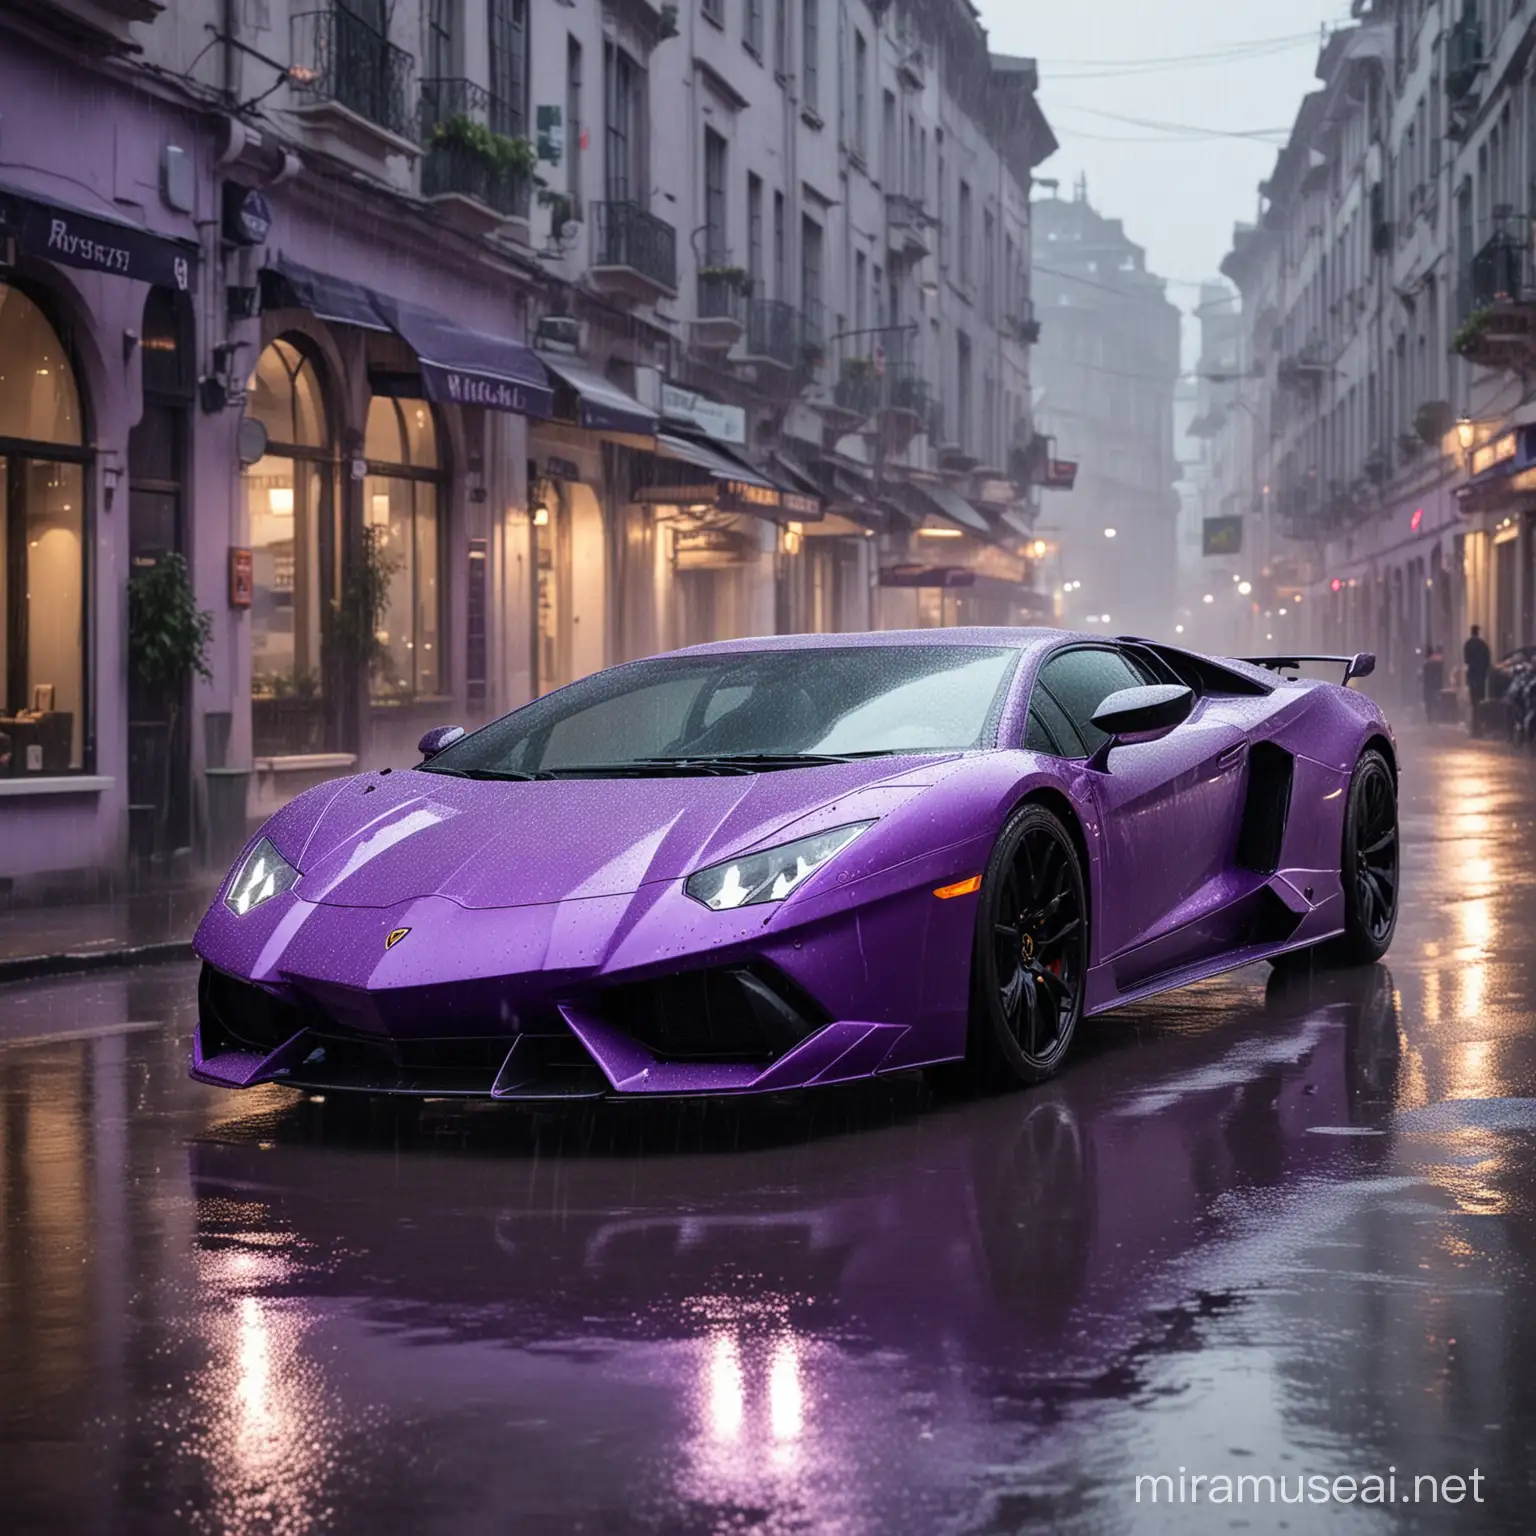 Sleek Purple Lamborghini Speeding Through Rainy Urban Streets